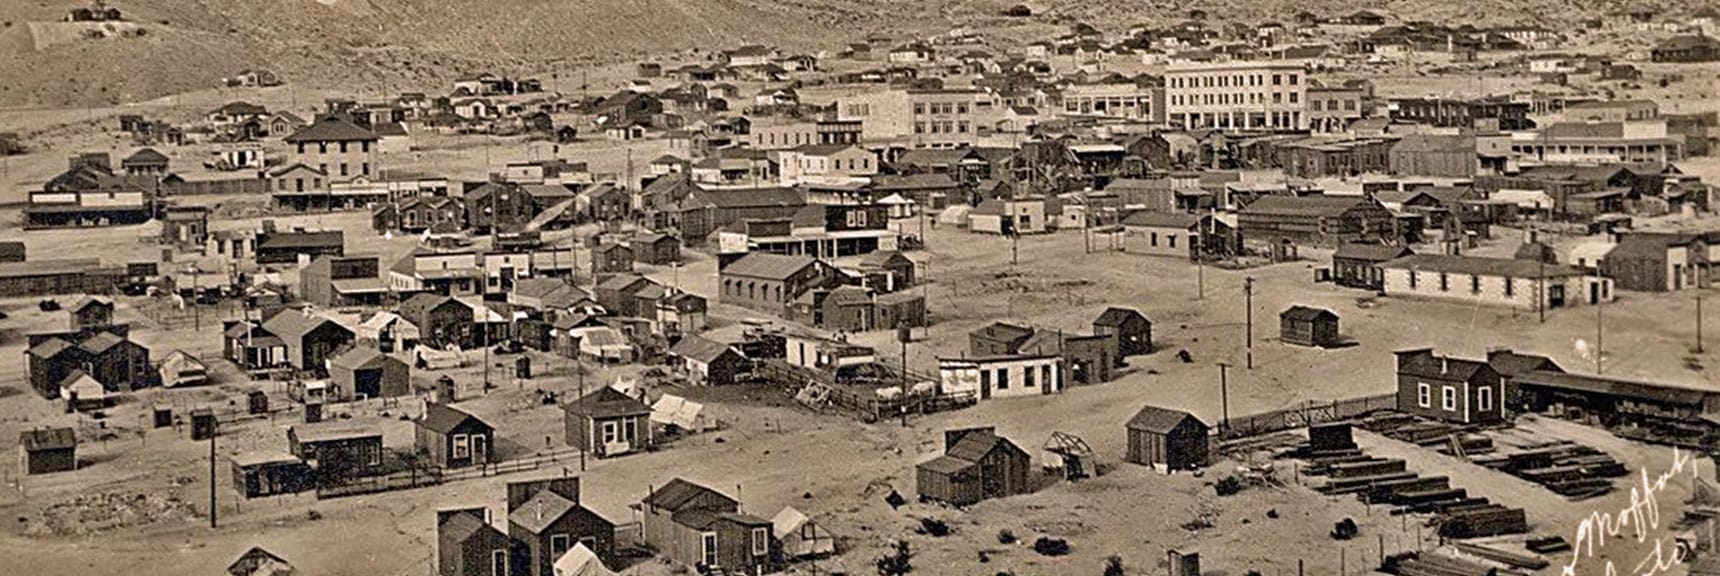 Gold Rush Town of Rhyolite Nevada, 1909 | Rhyolite Ghost Town, Nevada